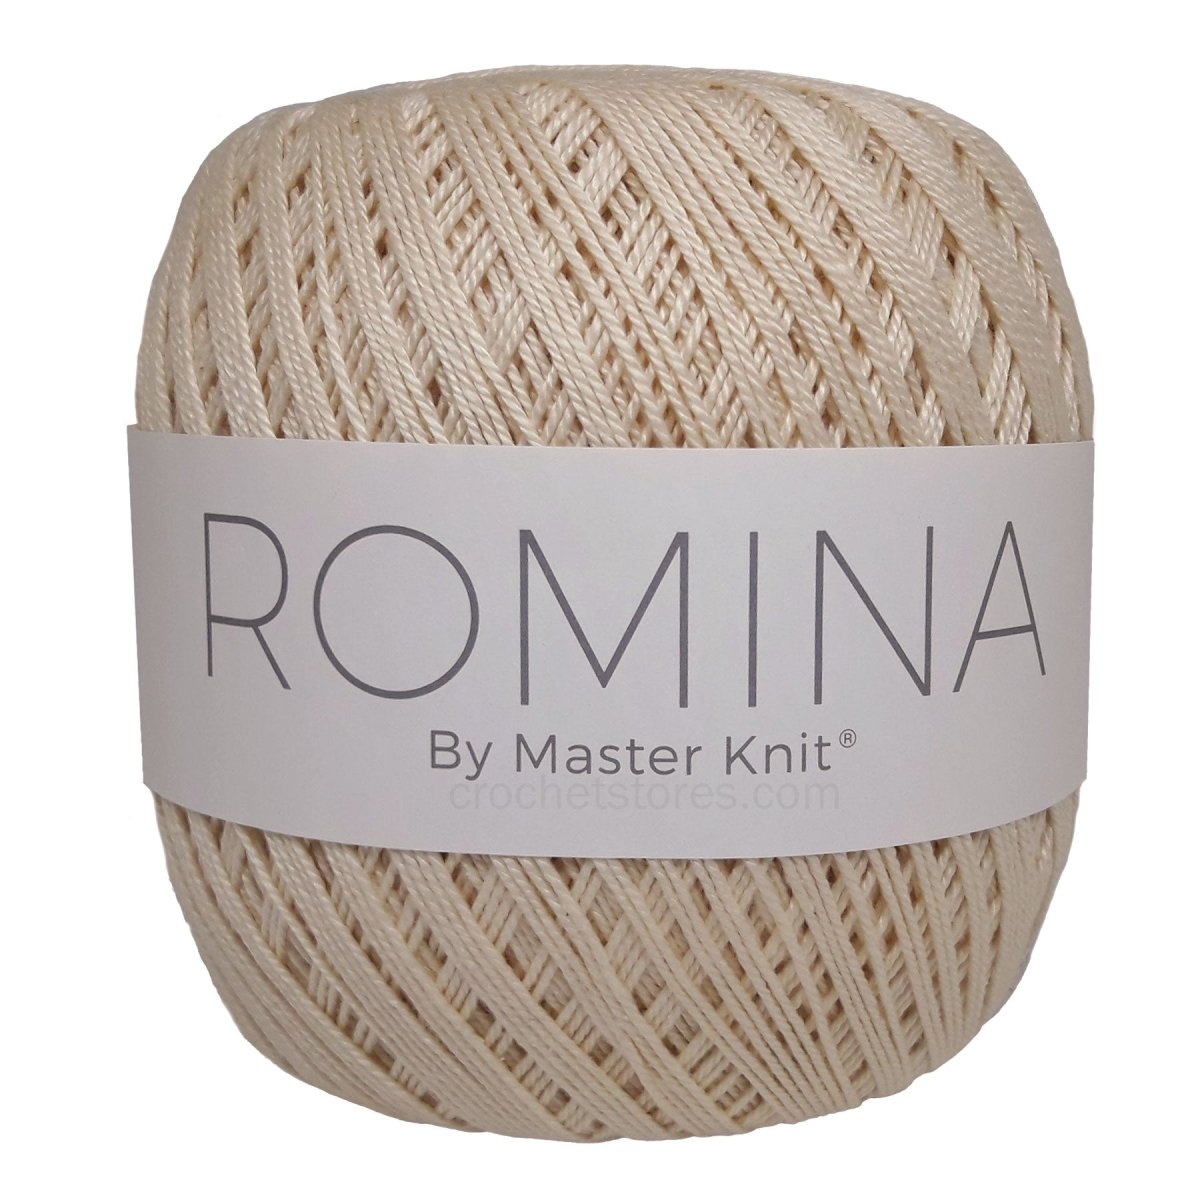 ROMINA - Crochetstores9335-404745051438630